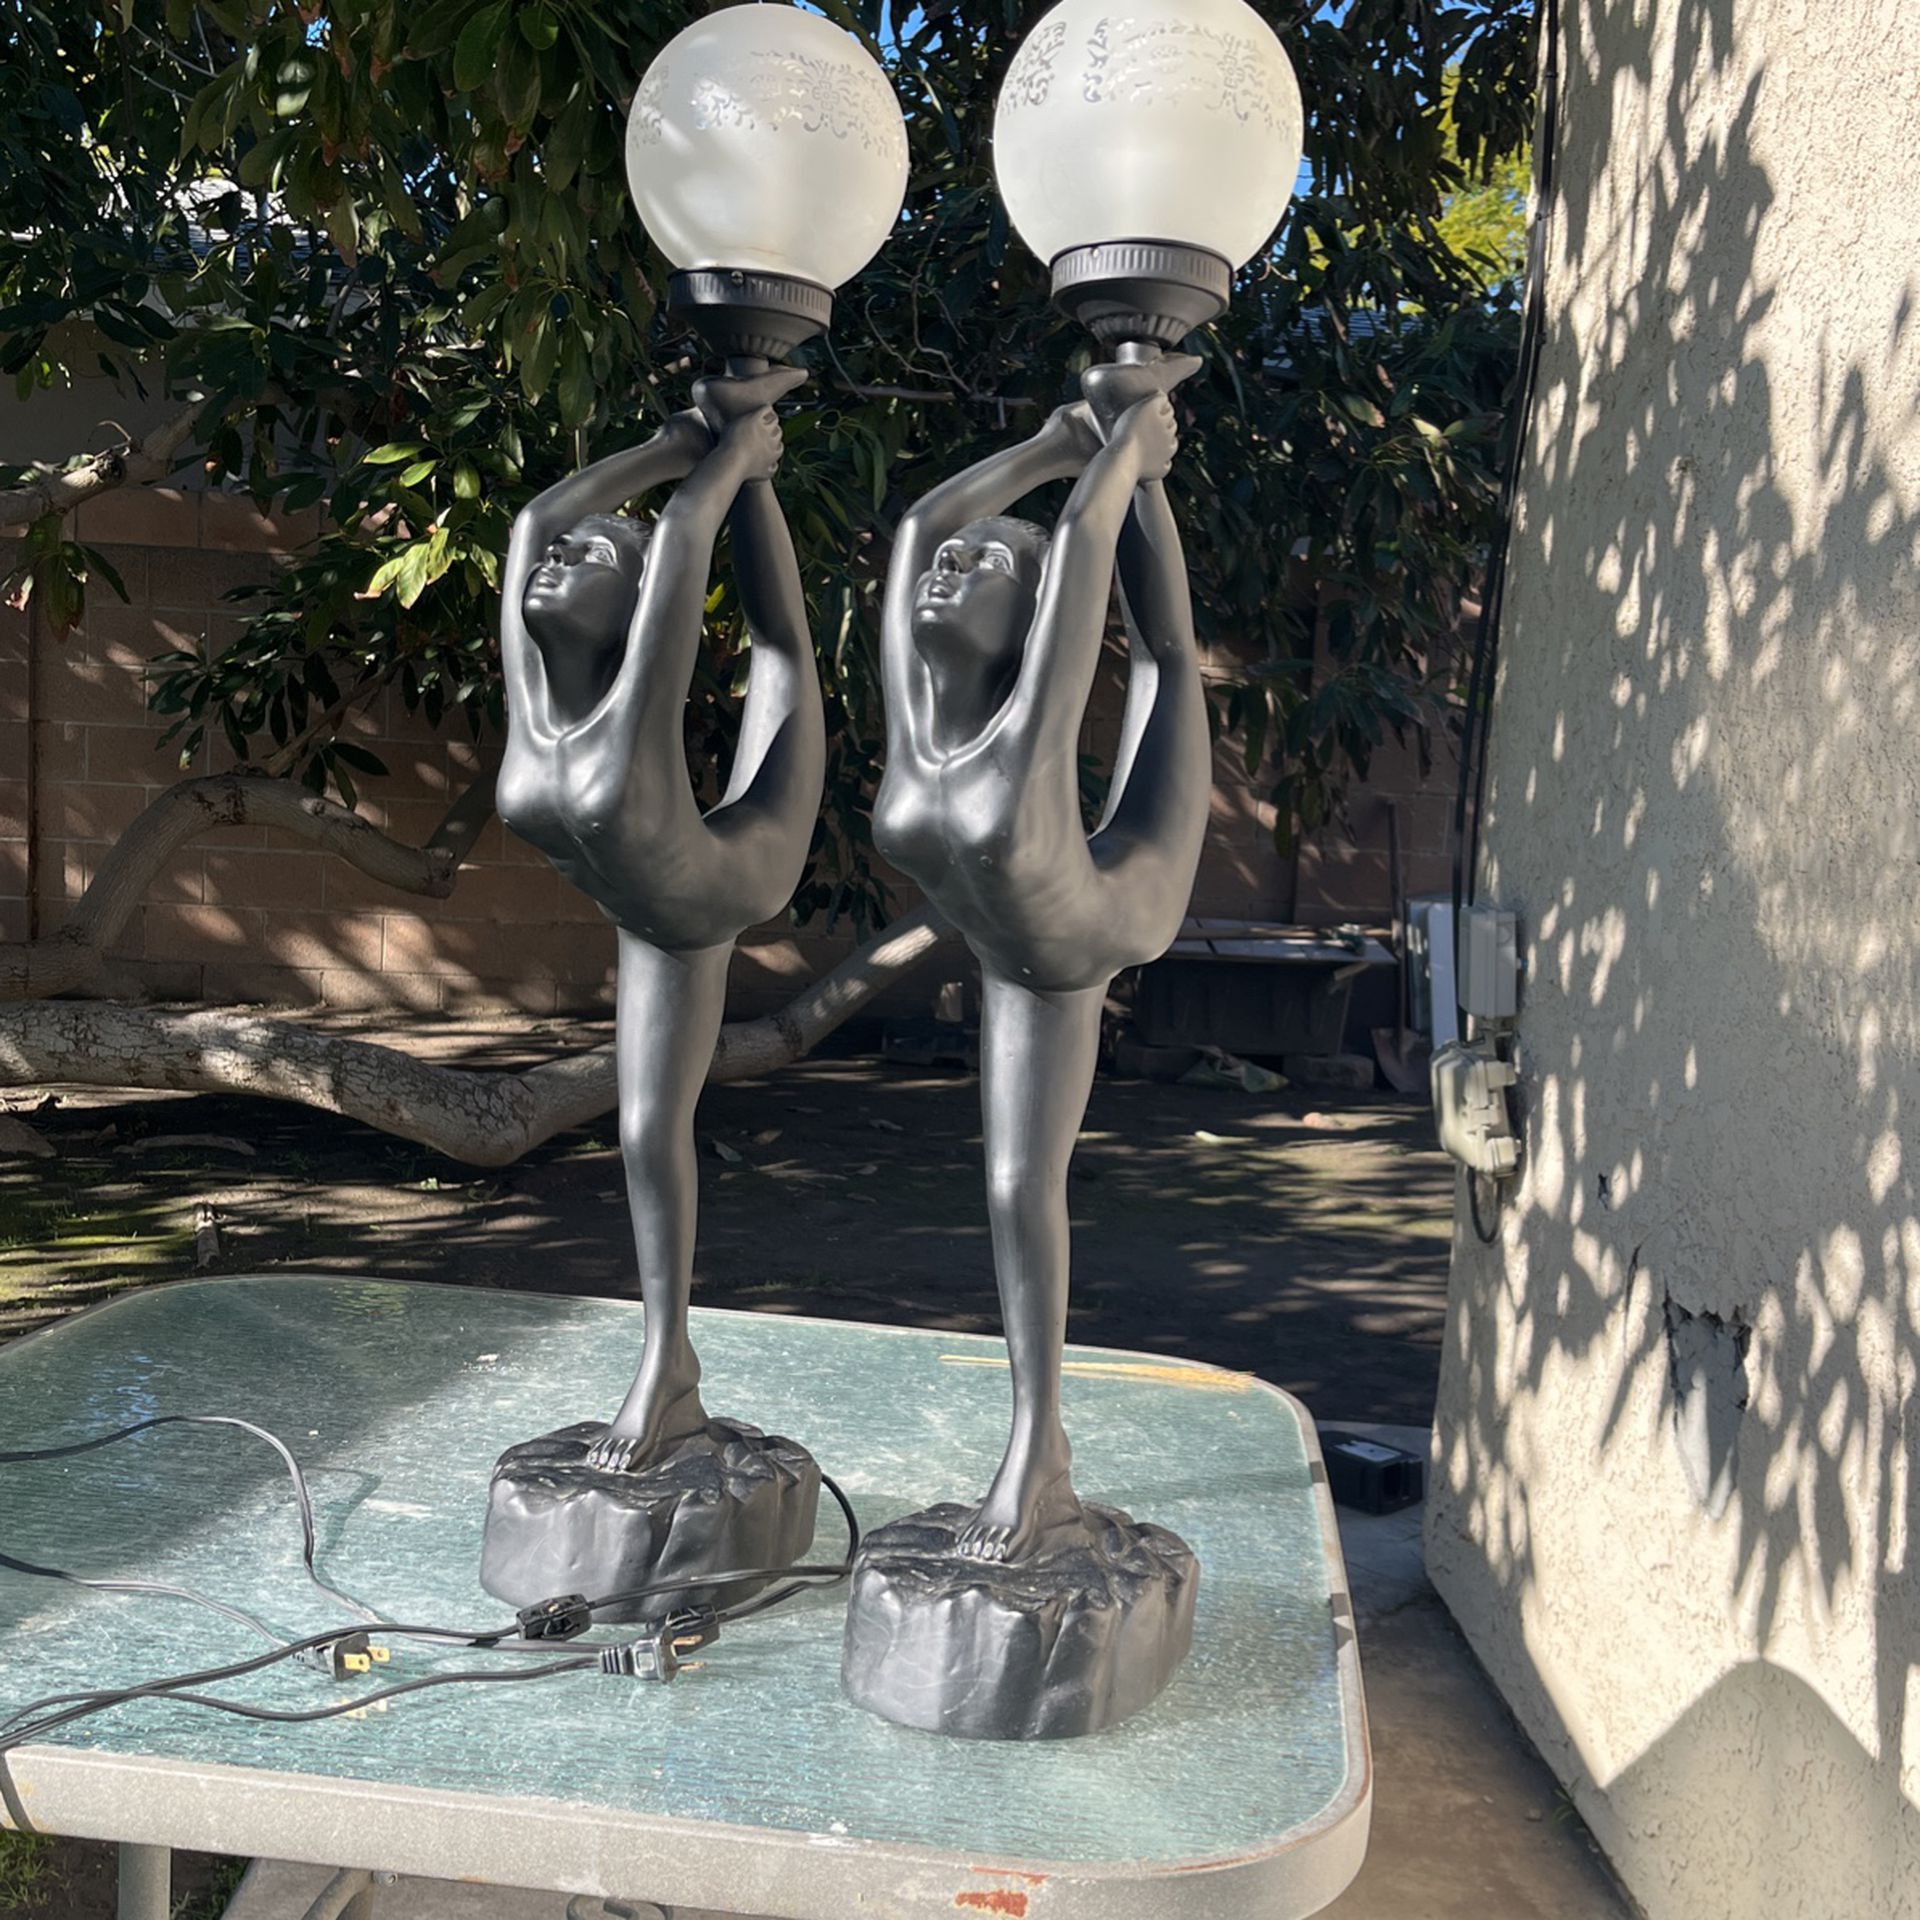 Figurine 32” tall Vintage Art Decor Statue Table Lamps